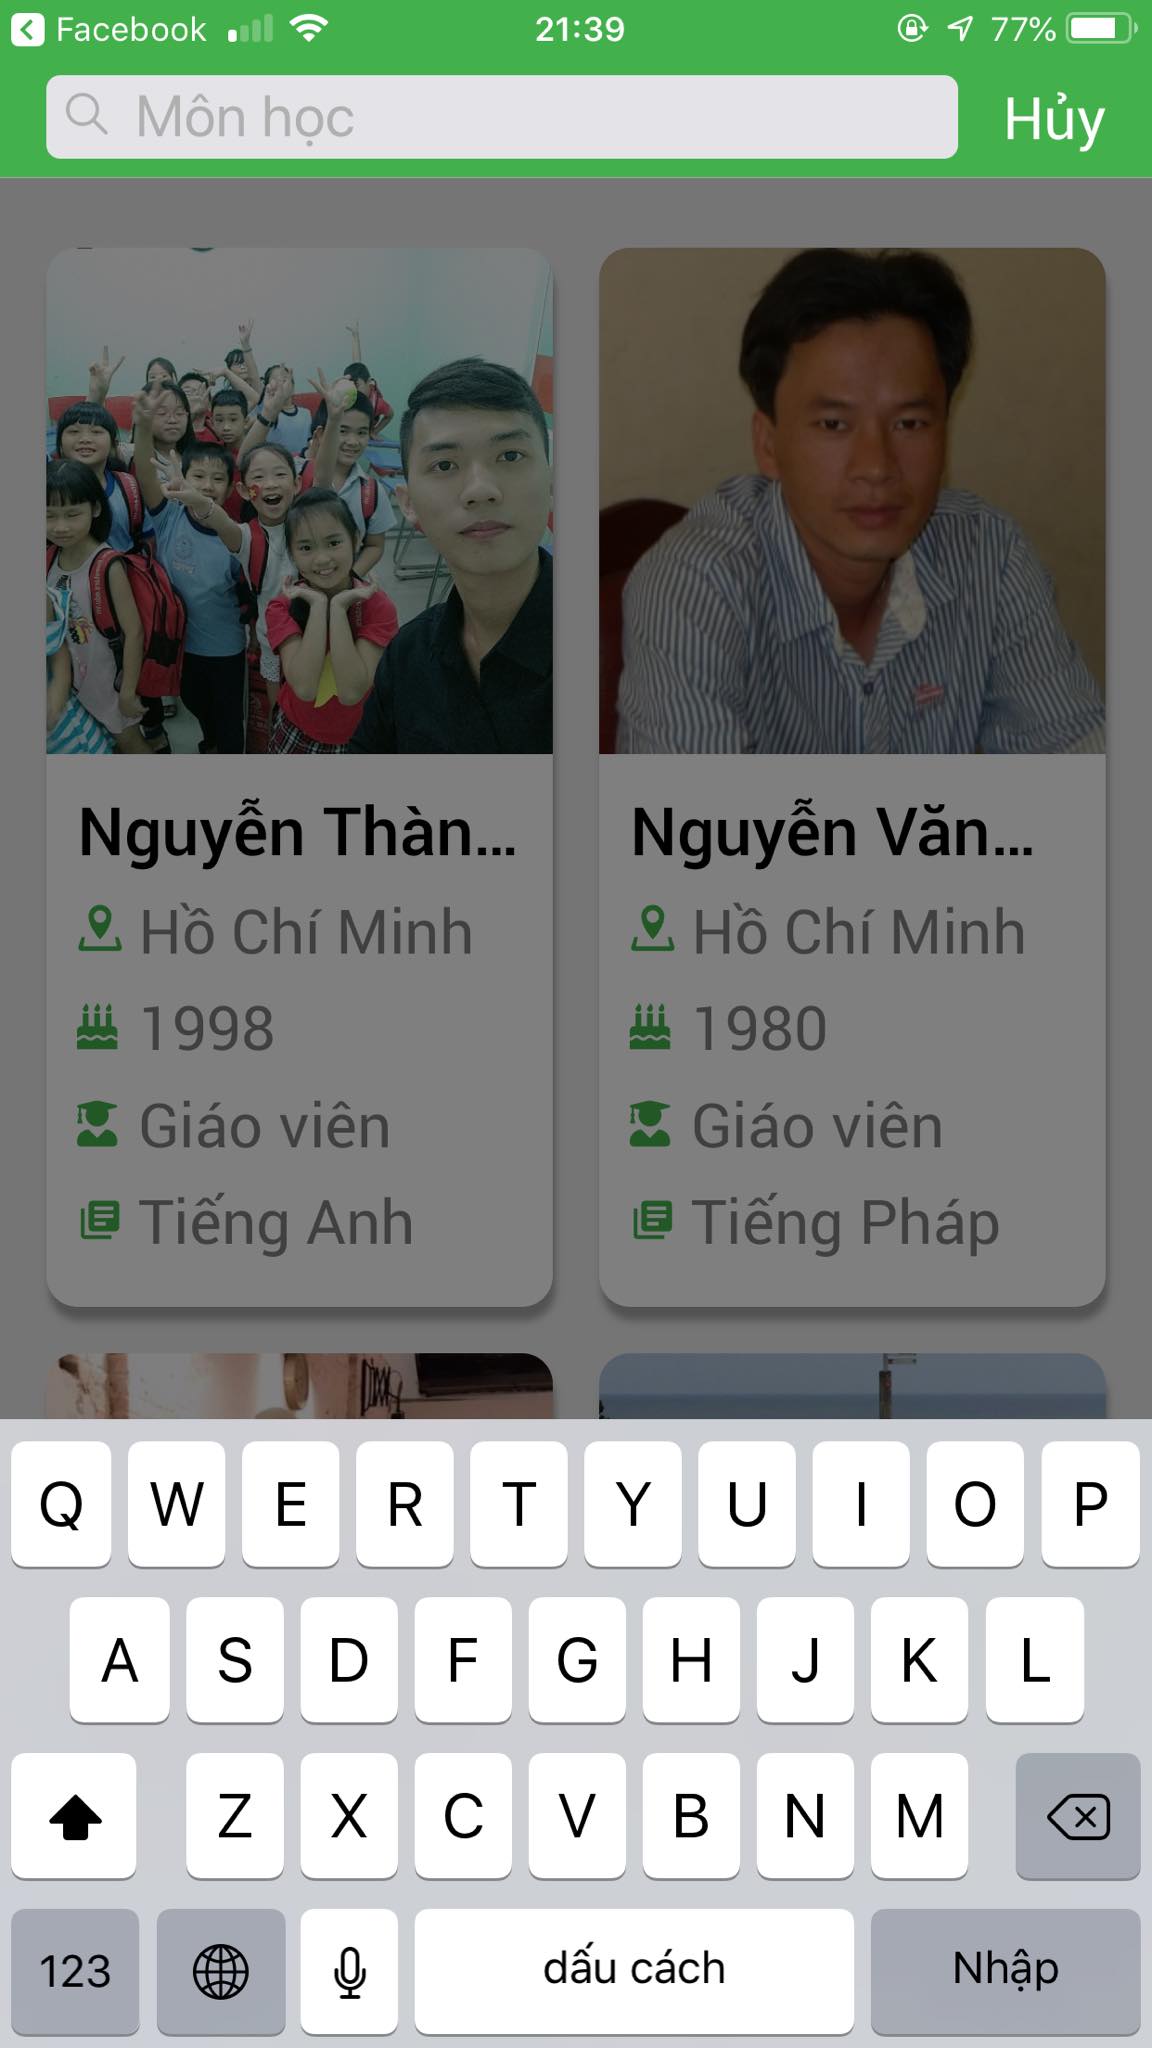 App Daykemtainha.vn